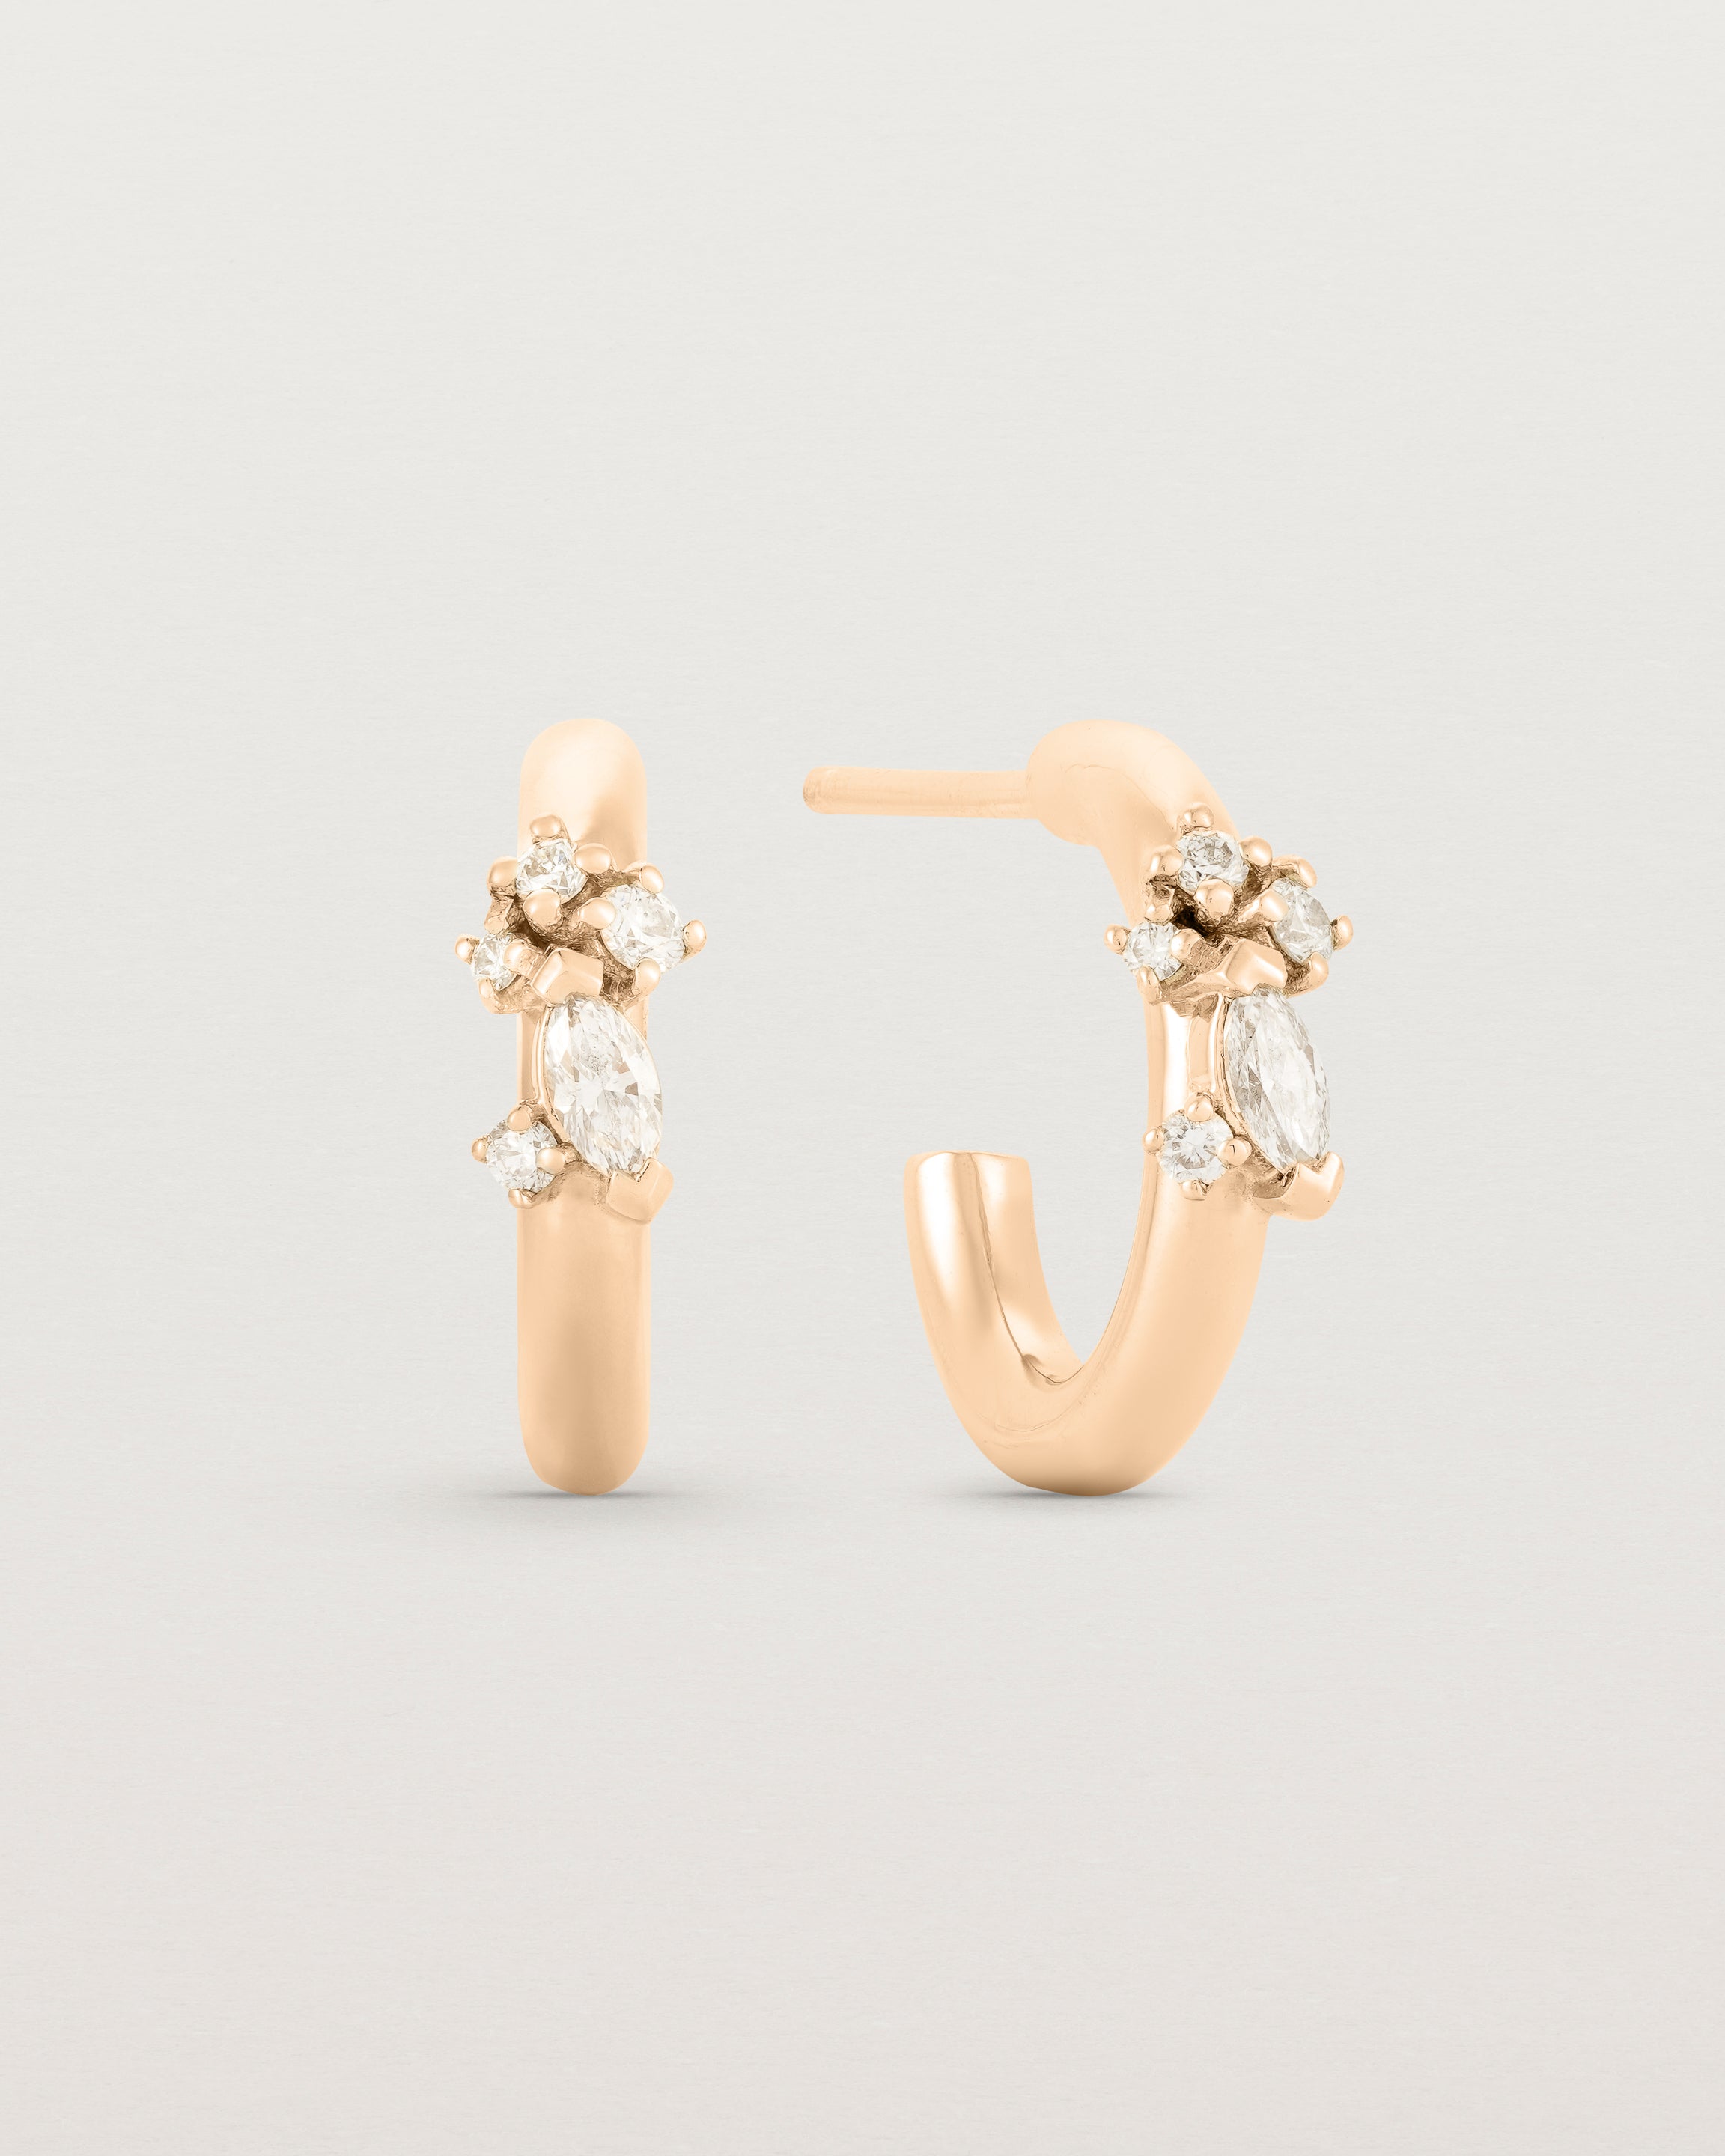 A pair of Amalia Hoops | Diamonds | Rose Gold.